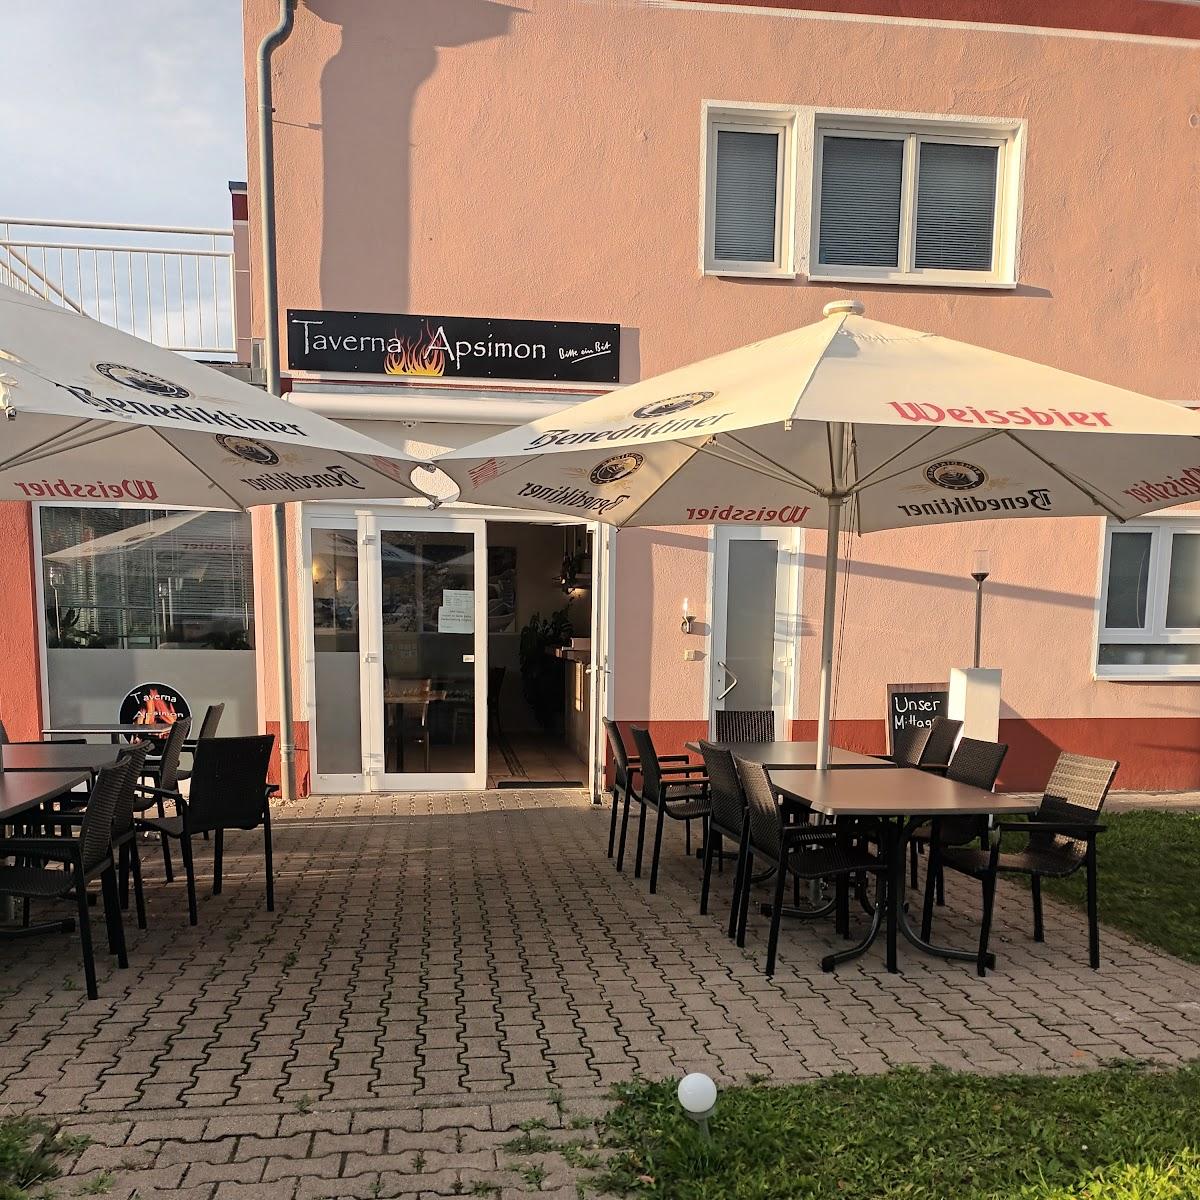 Restaurant "Taverna Apsimon" in Mainz